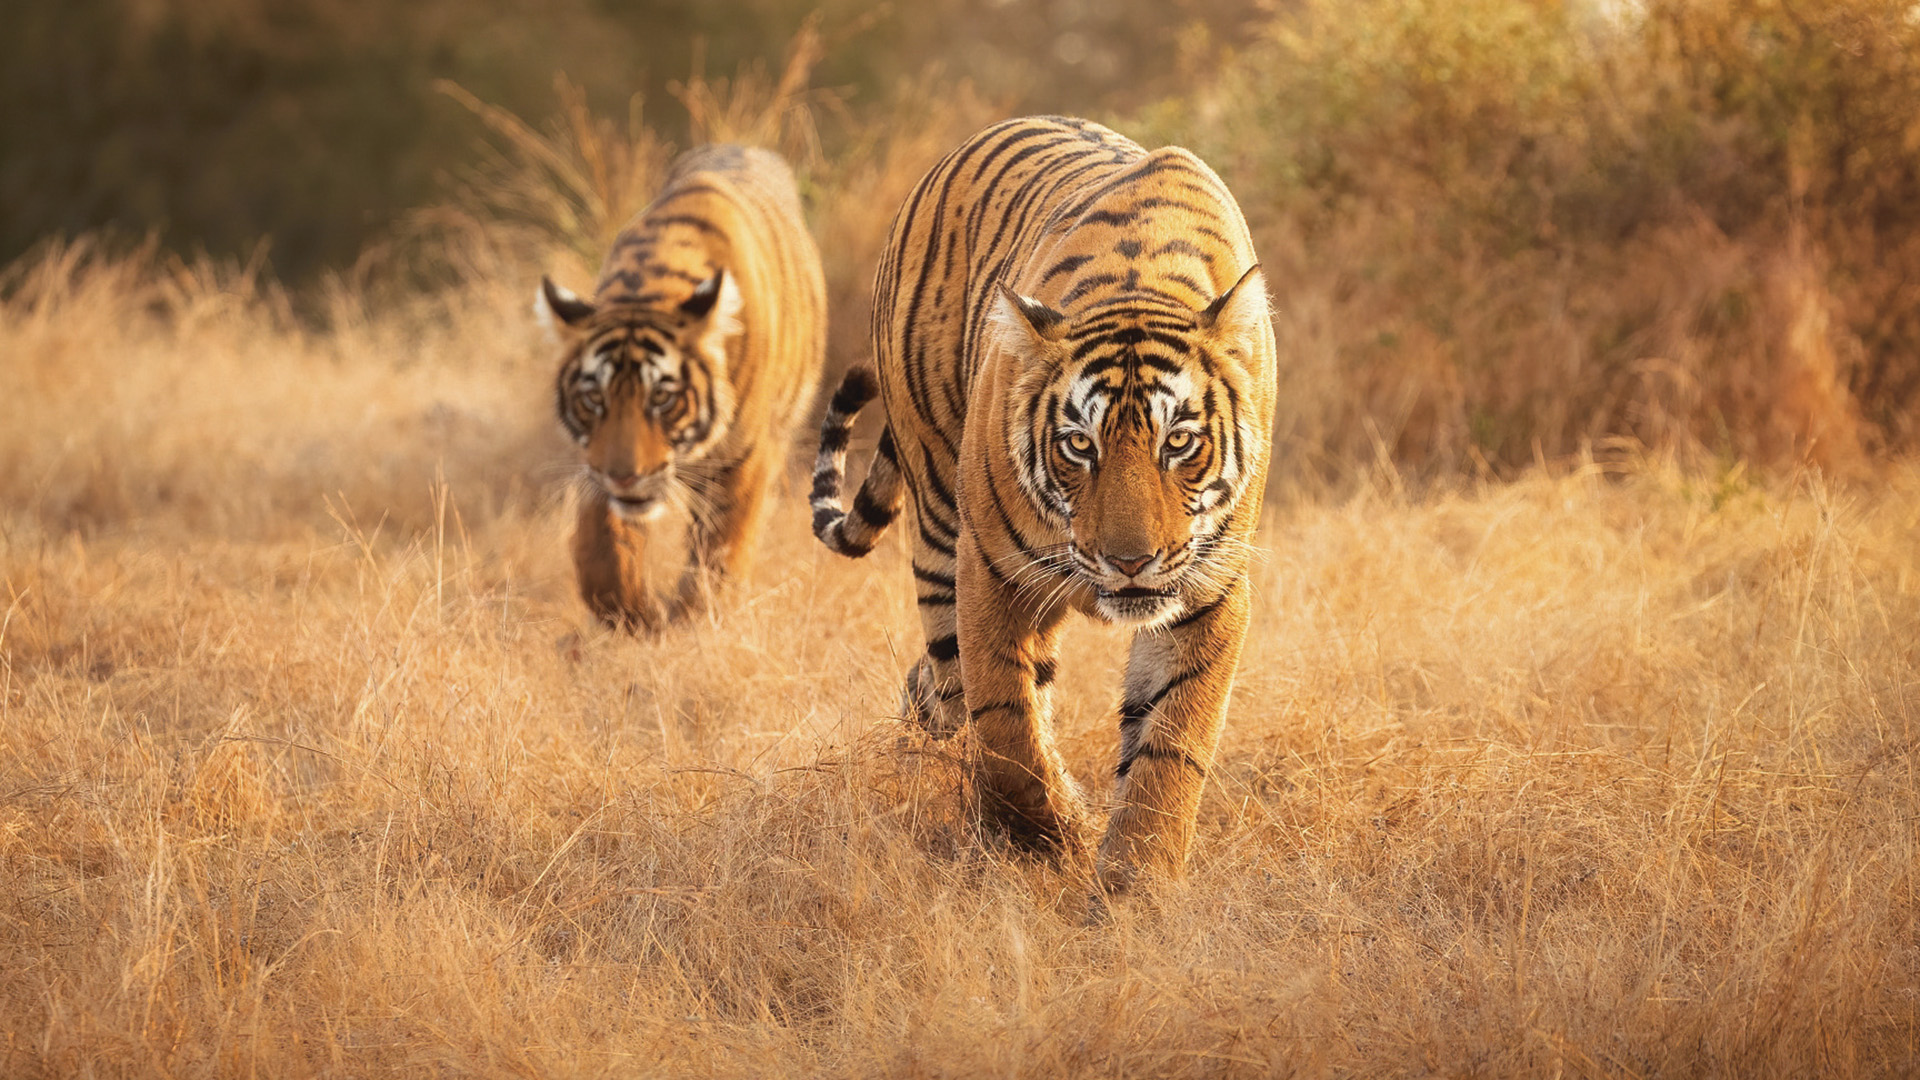 Bengal tigers by Graeme Green